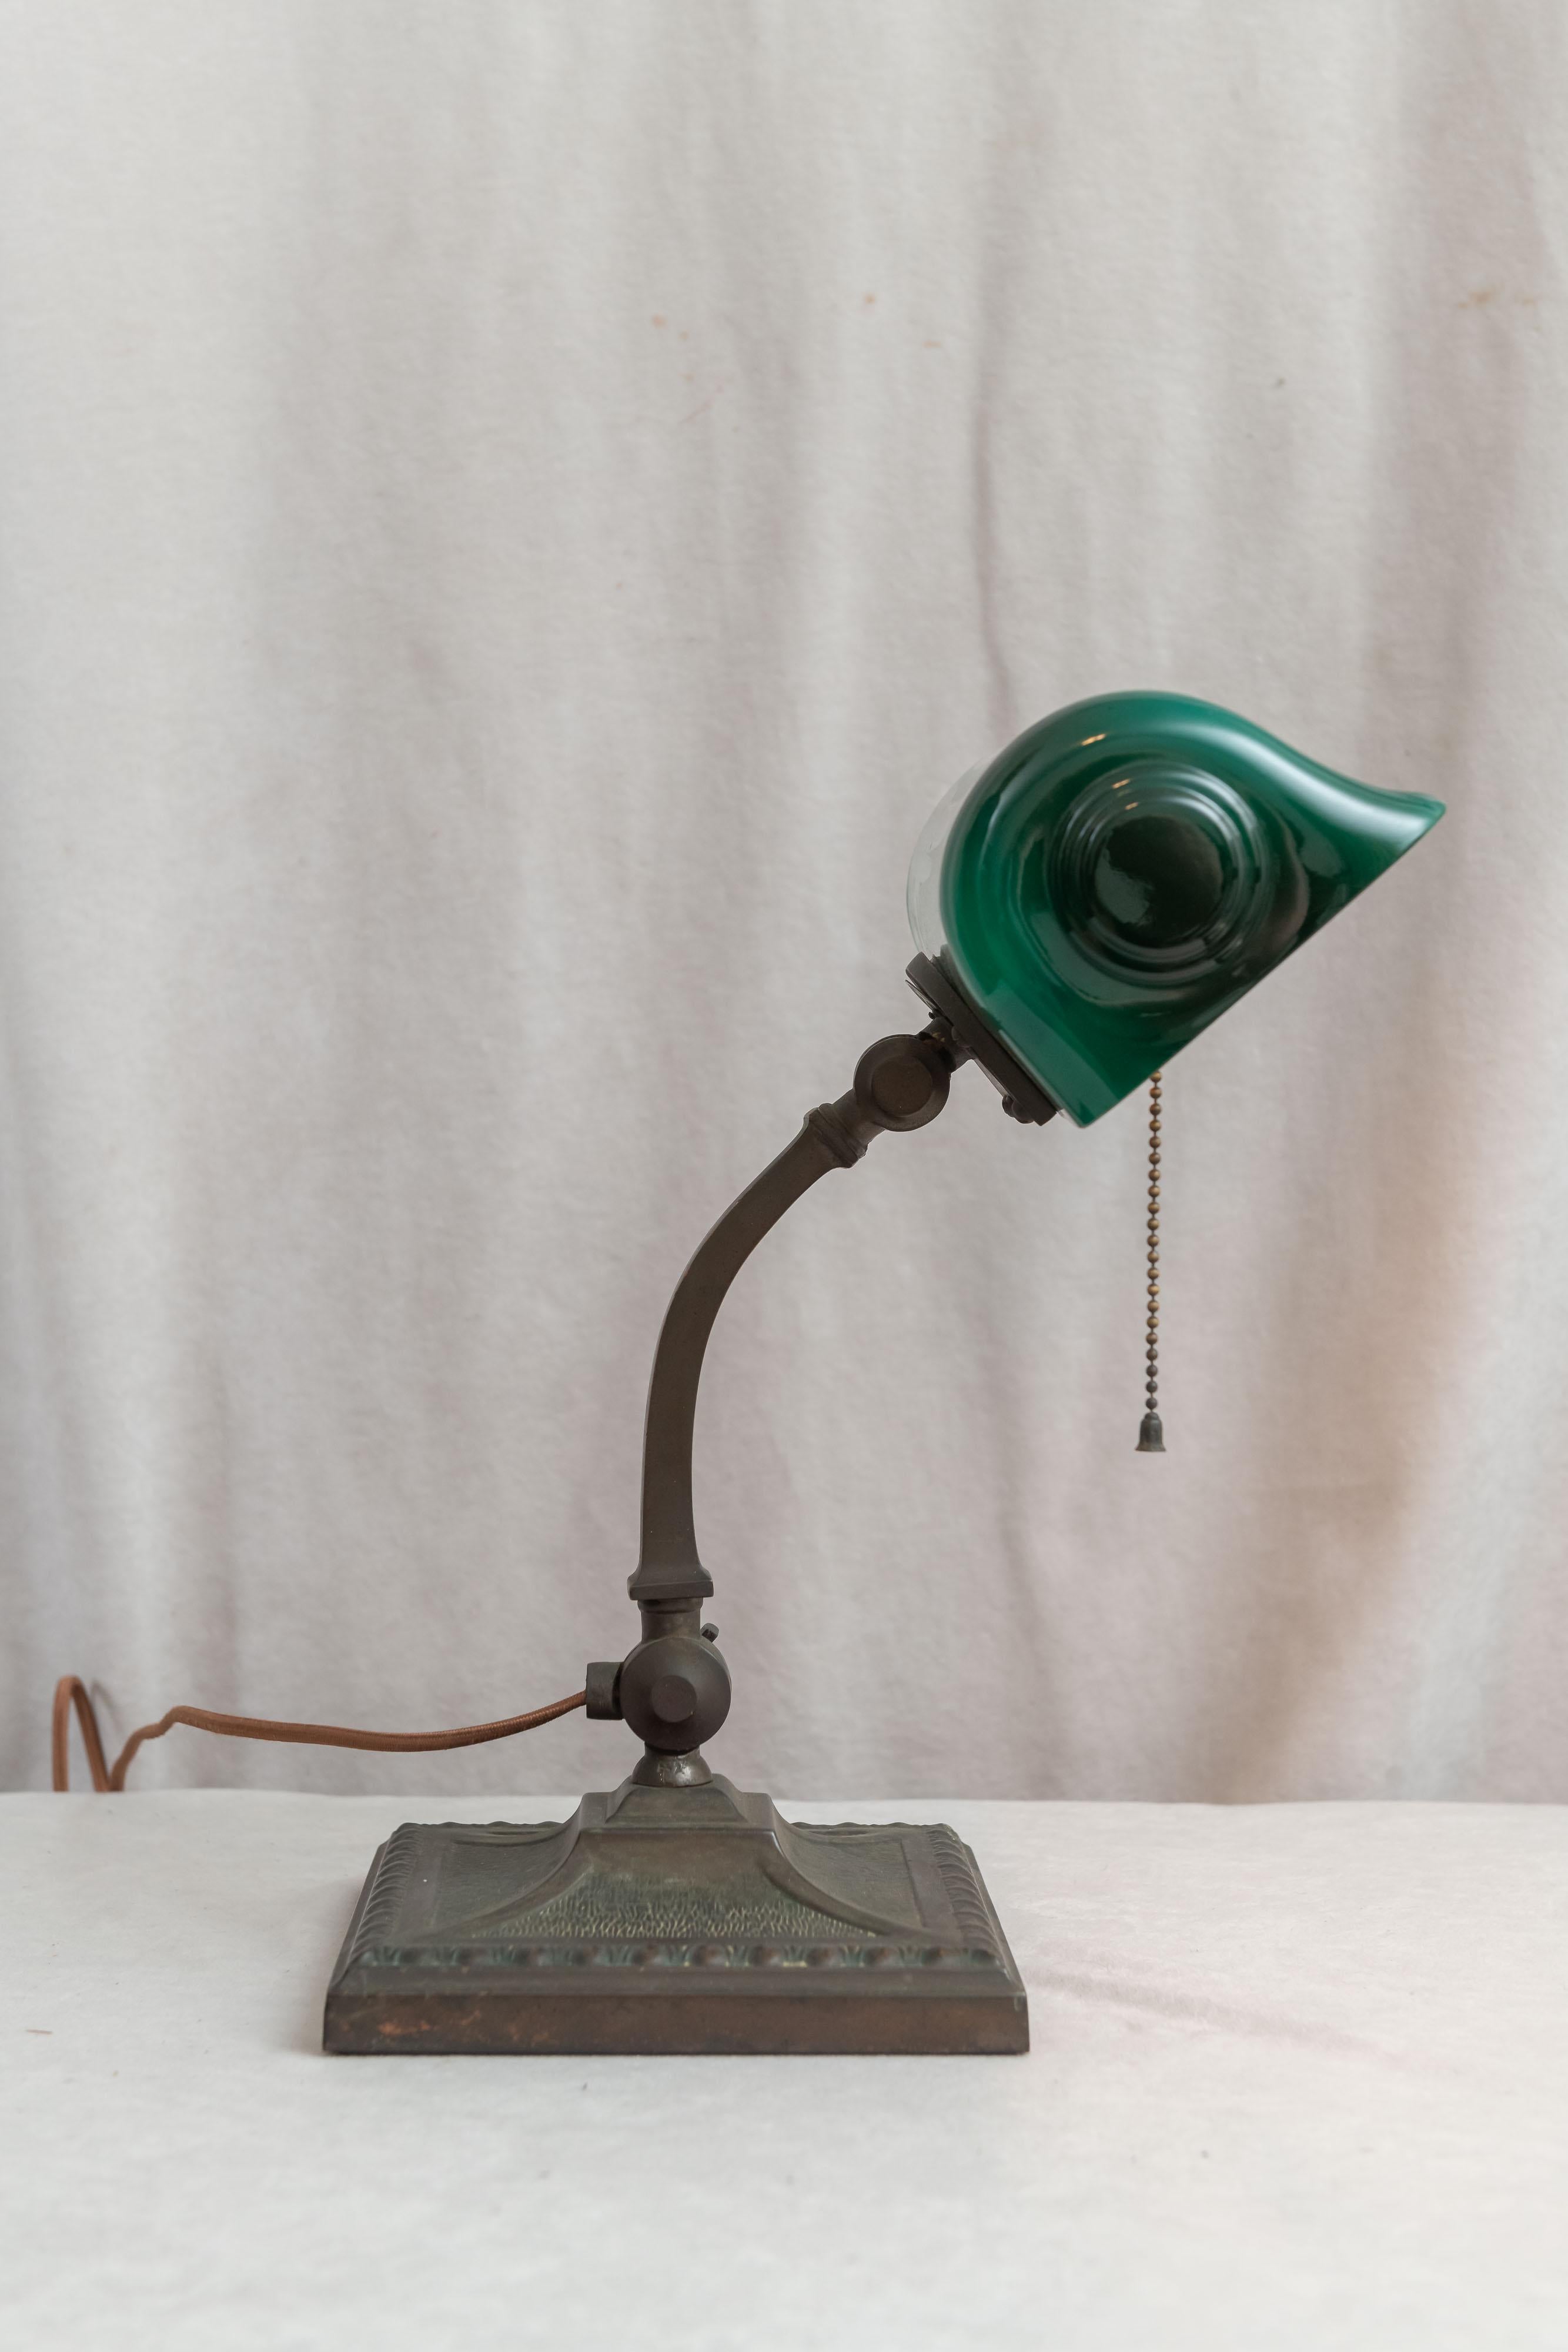 American Green Shade Banker's Desk Lamp by Verdelite, ca. 1918